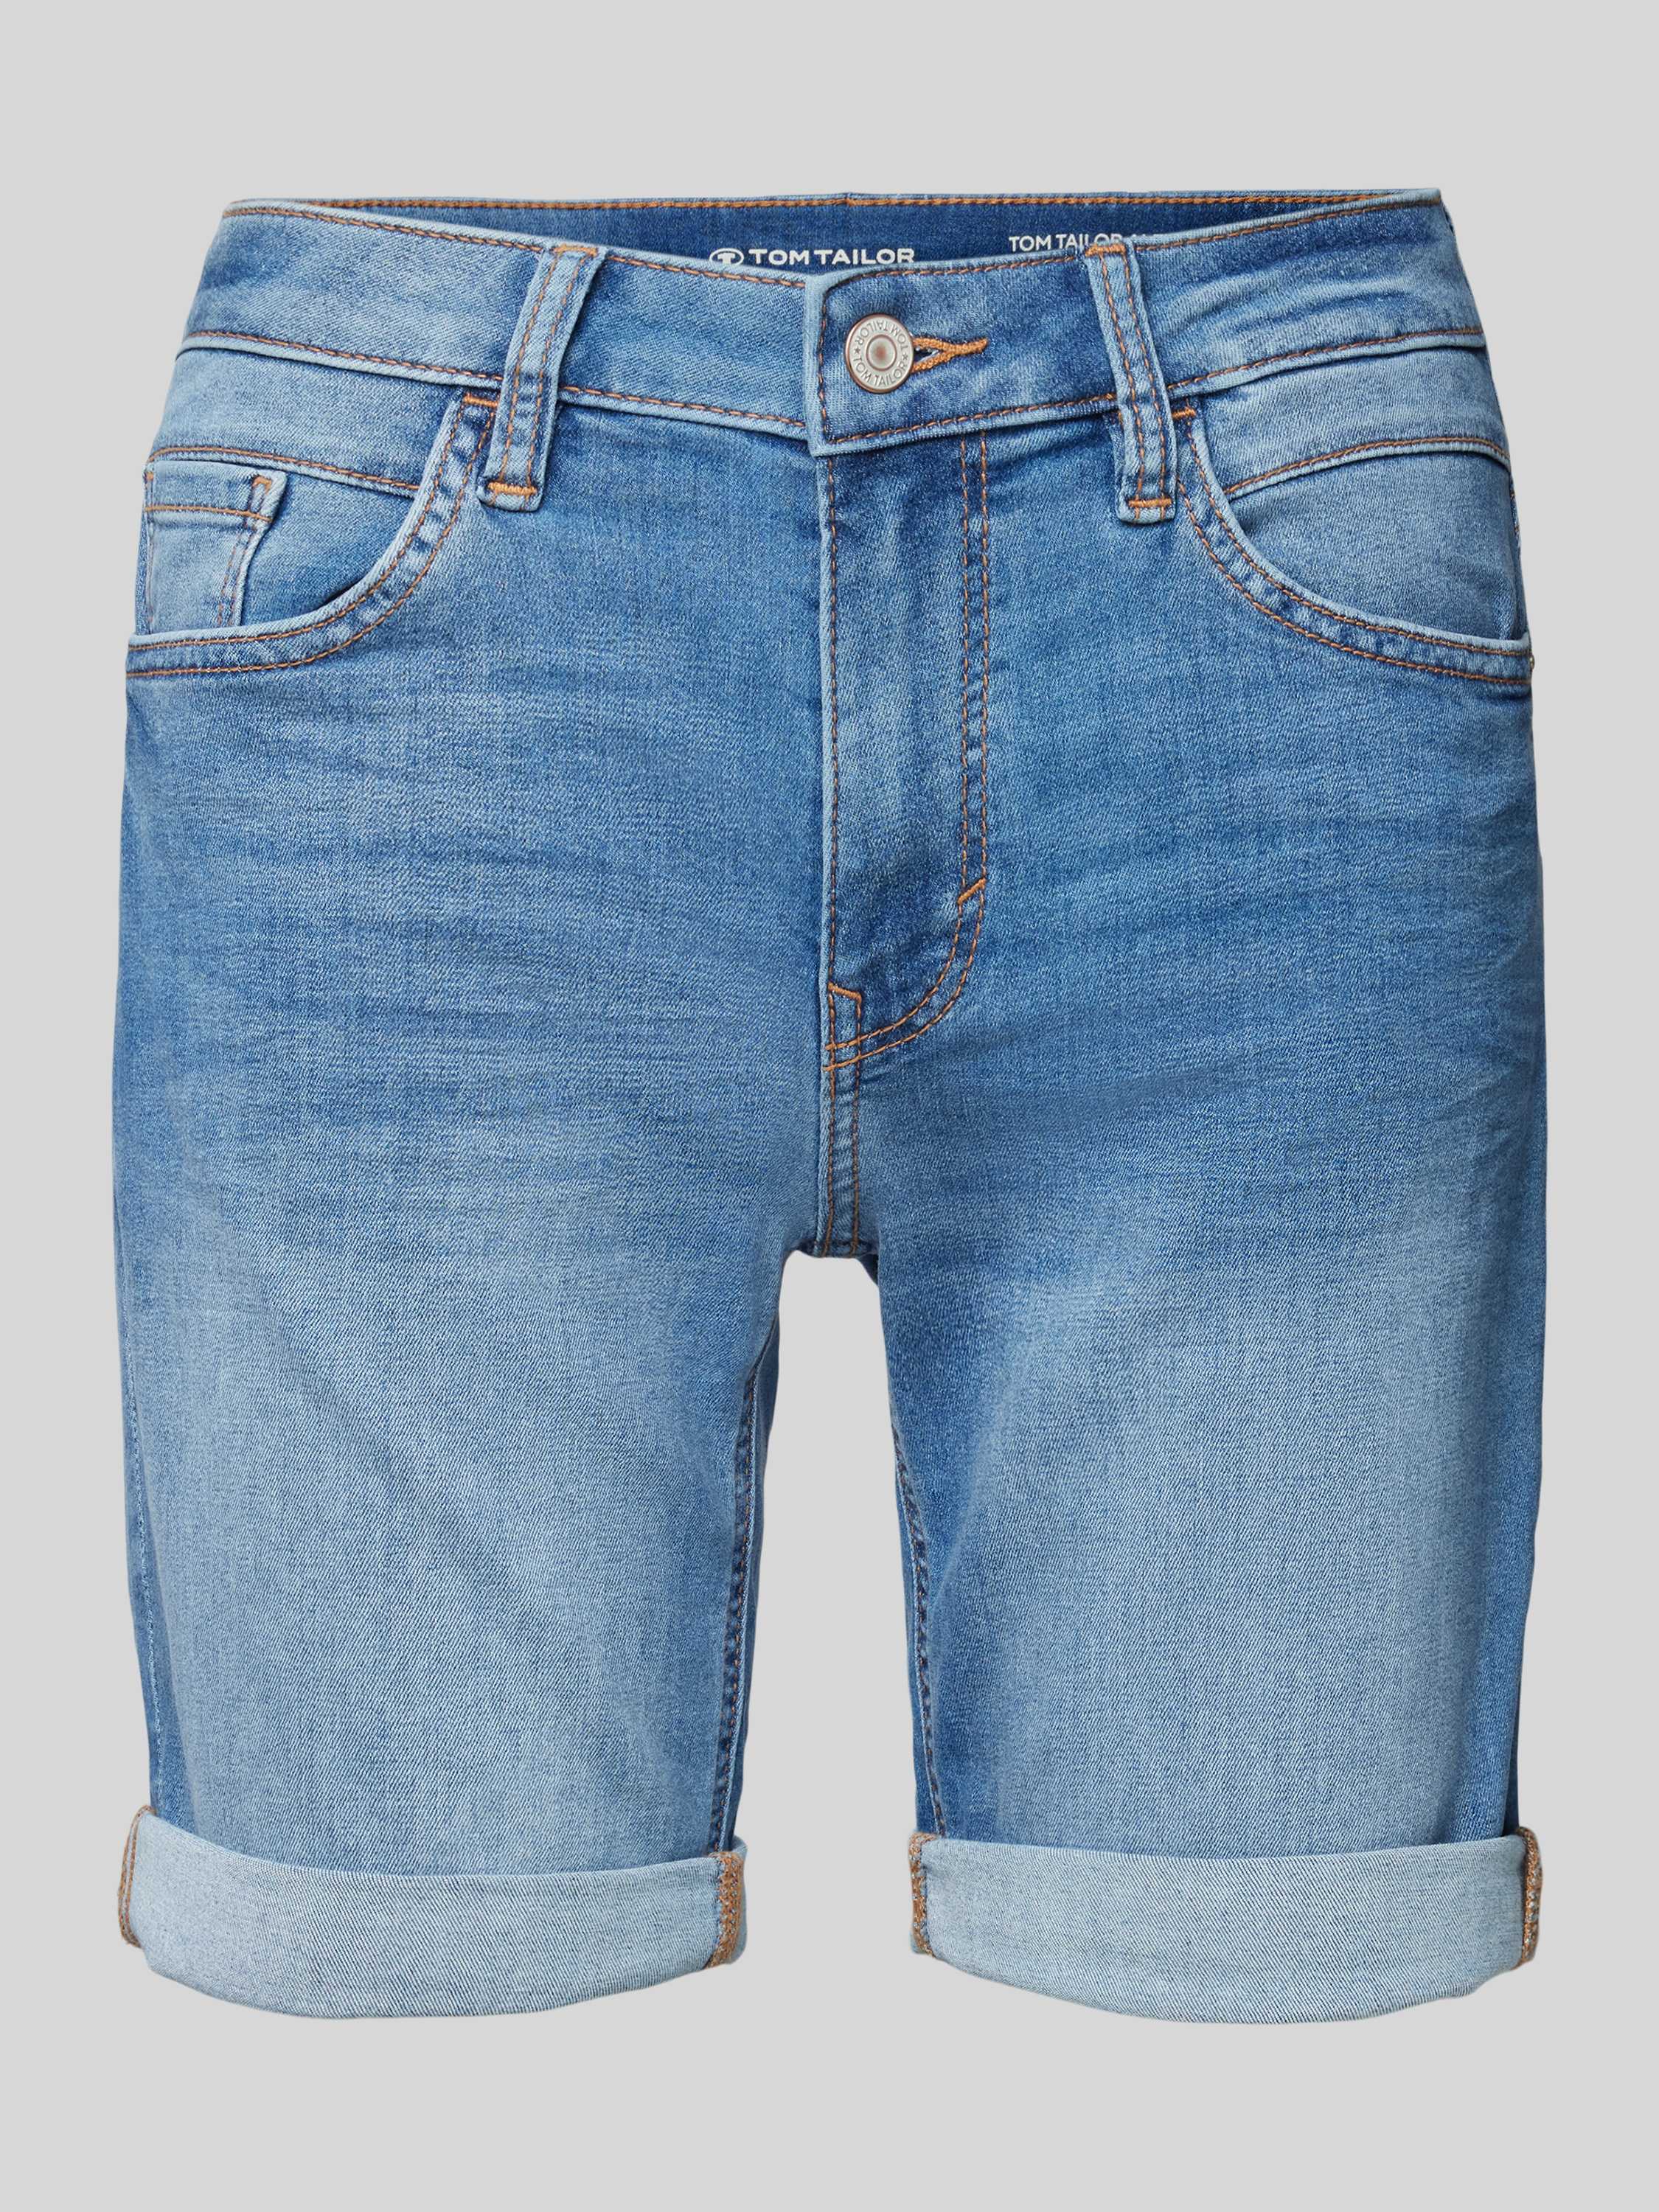 Slim Fit Jeansbermudas im 5-Pocket-Design